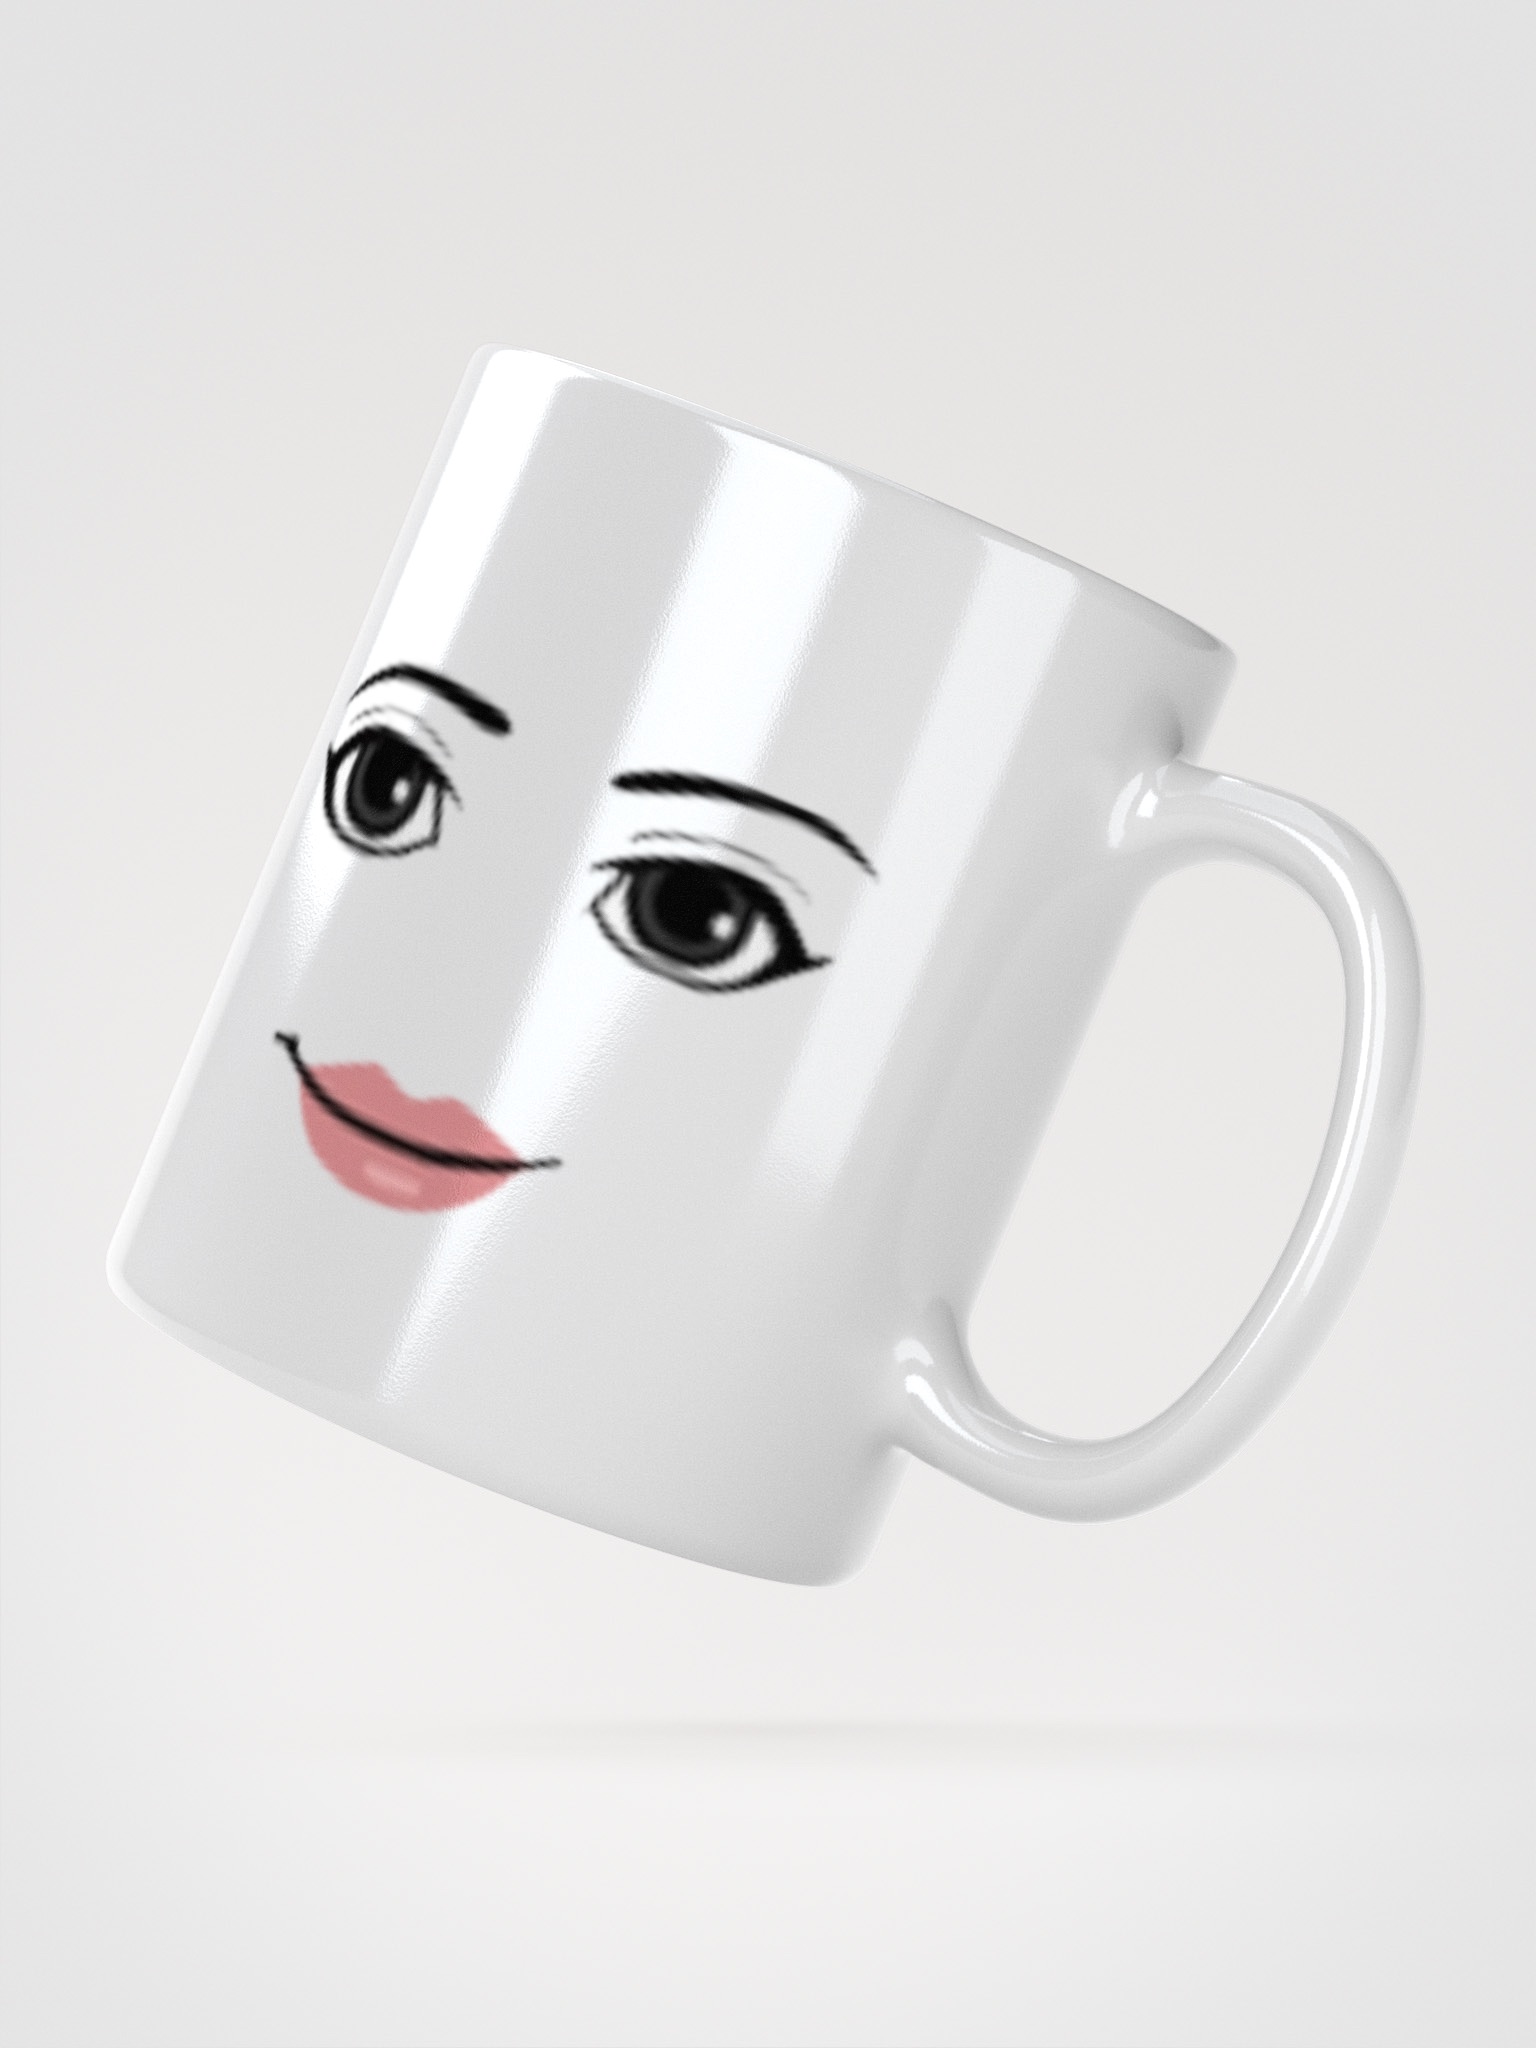 Roblox Man Face Mug | Funny cup | Meme mug | Roblox